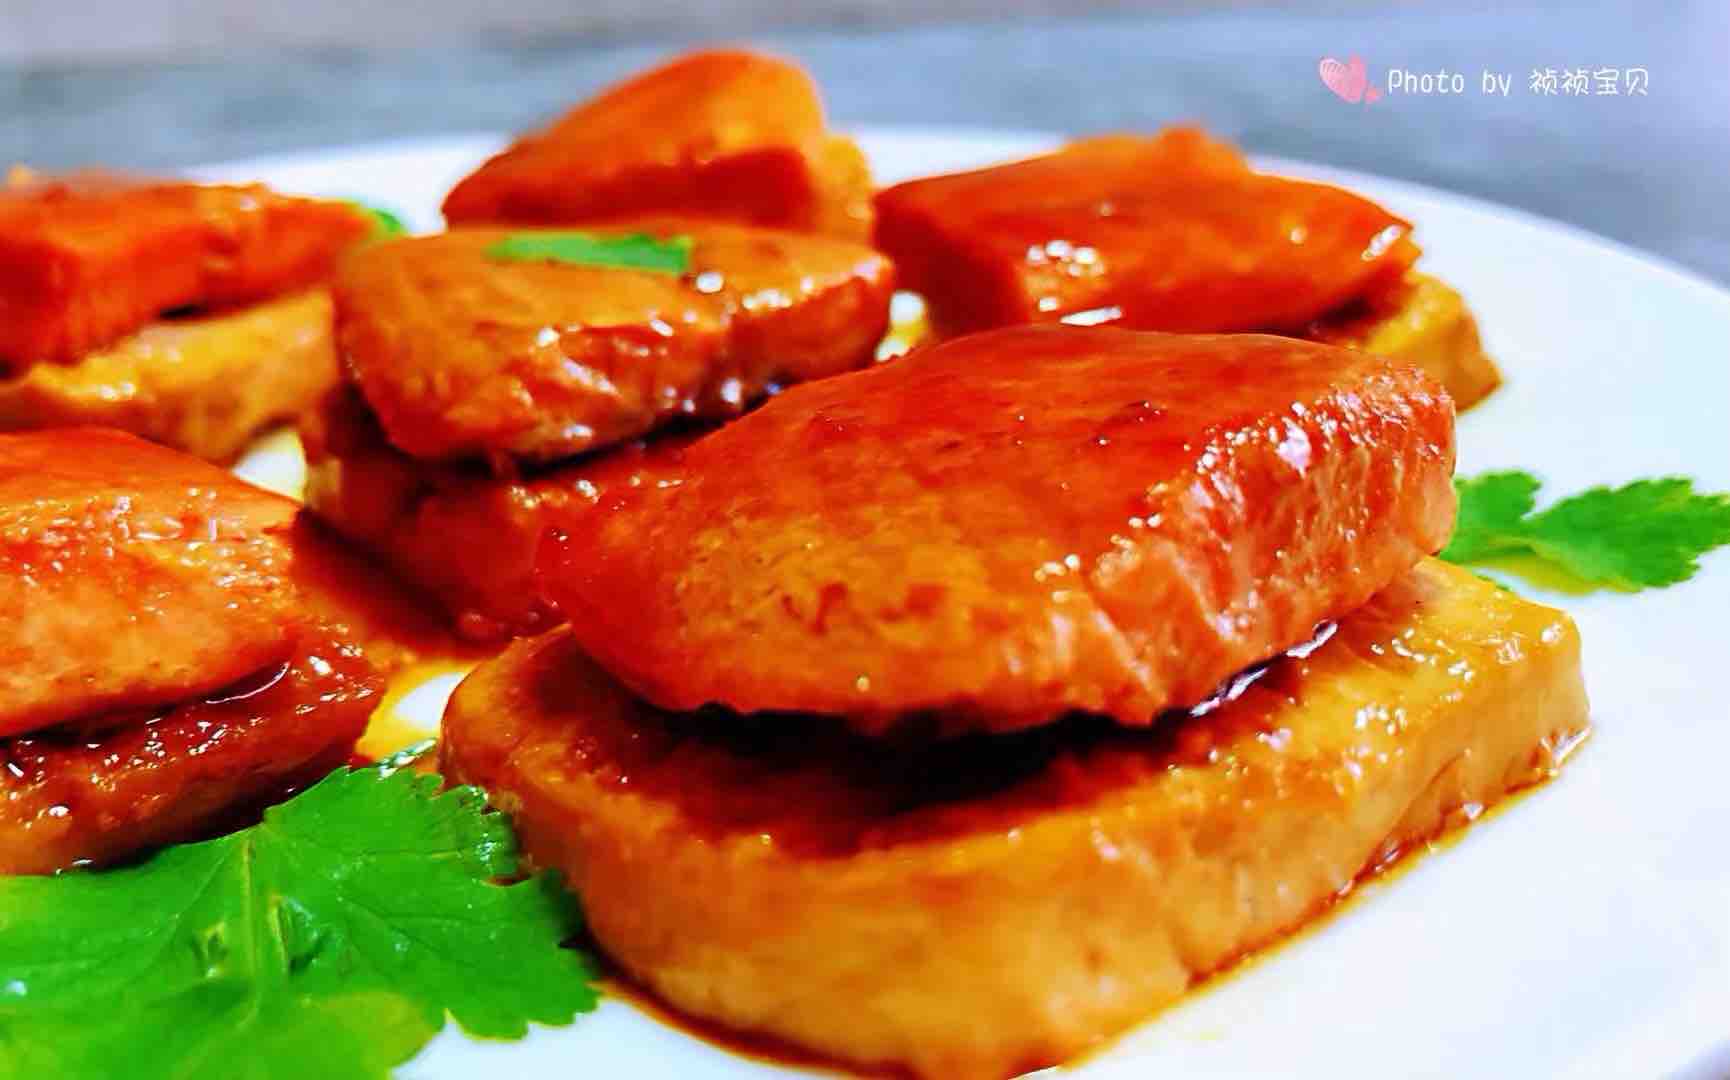 Teriyaki Salmon and Fried Tofu recipe